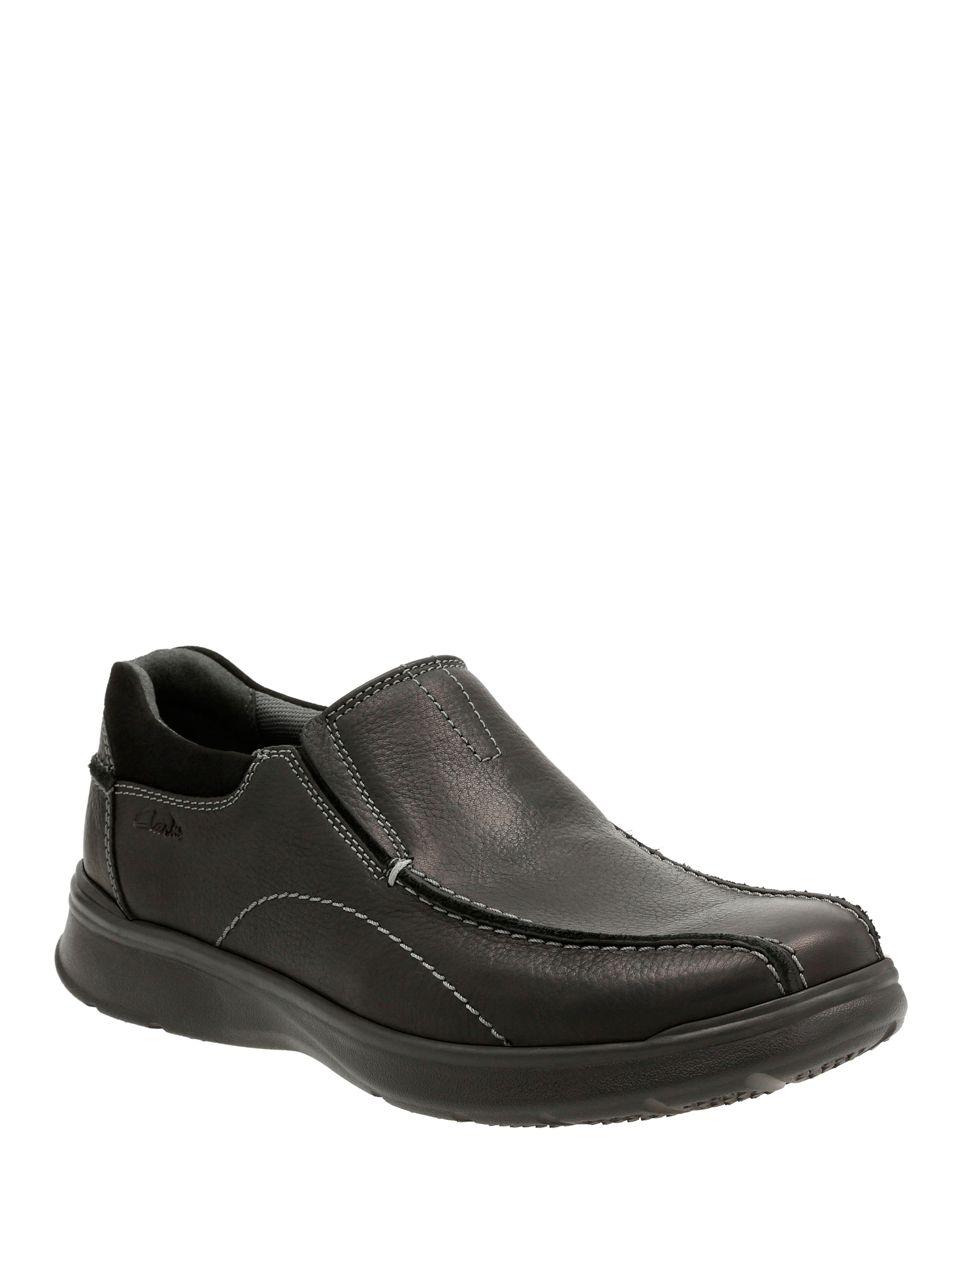 Lyst - Clarks Leather Slip-on Shoes in Black for Men